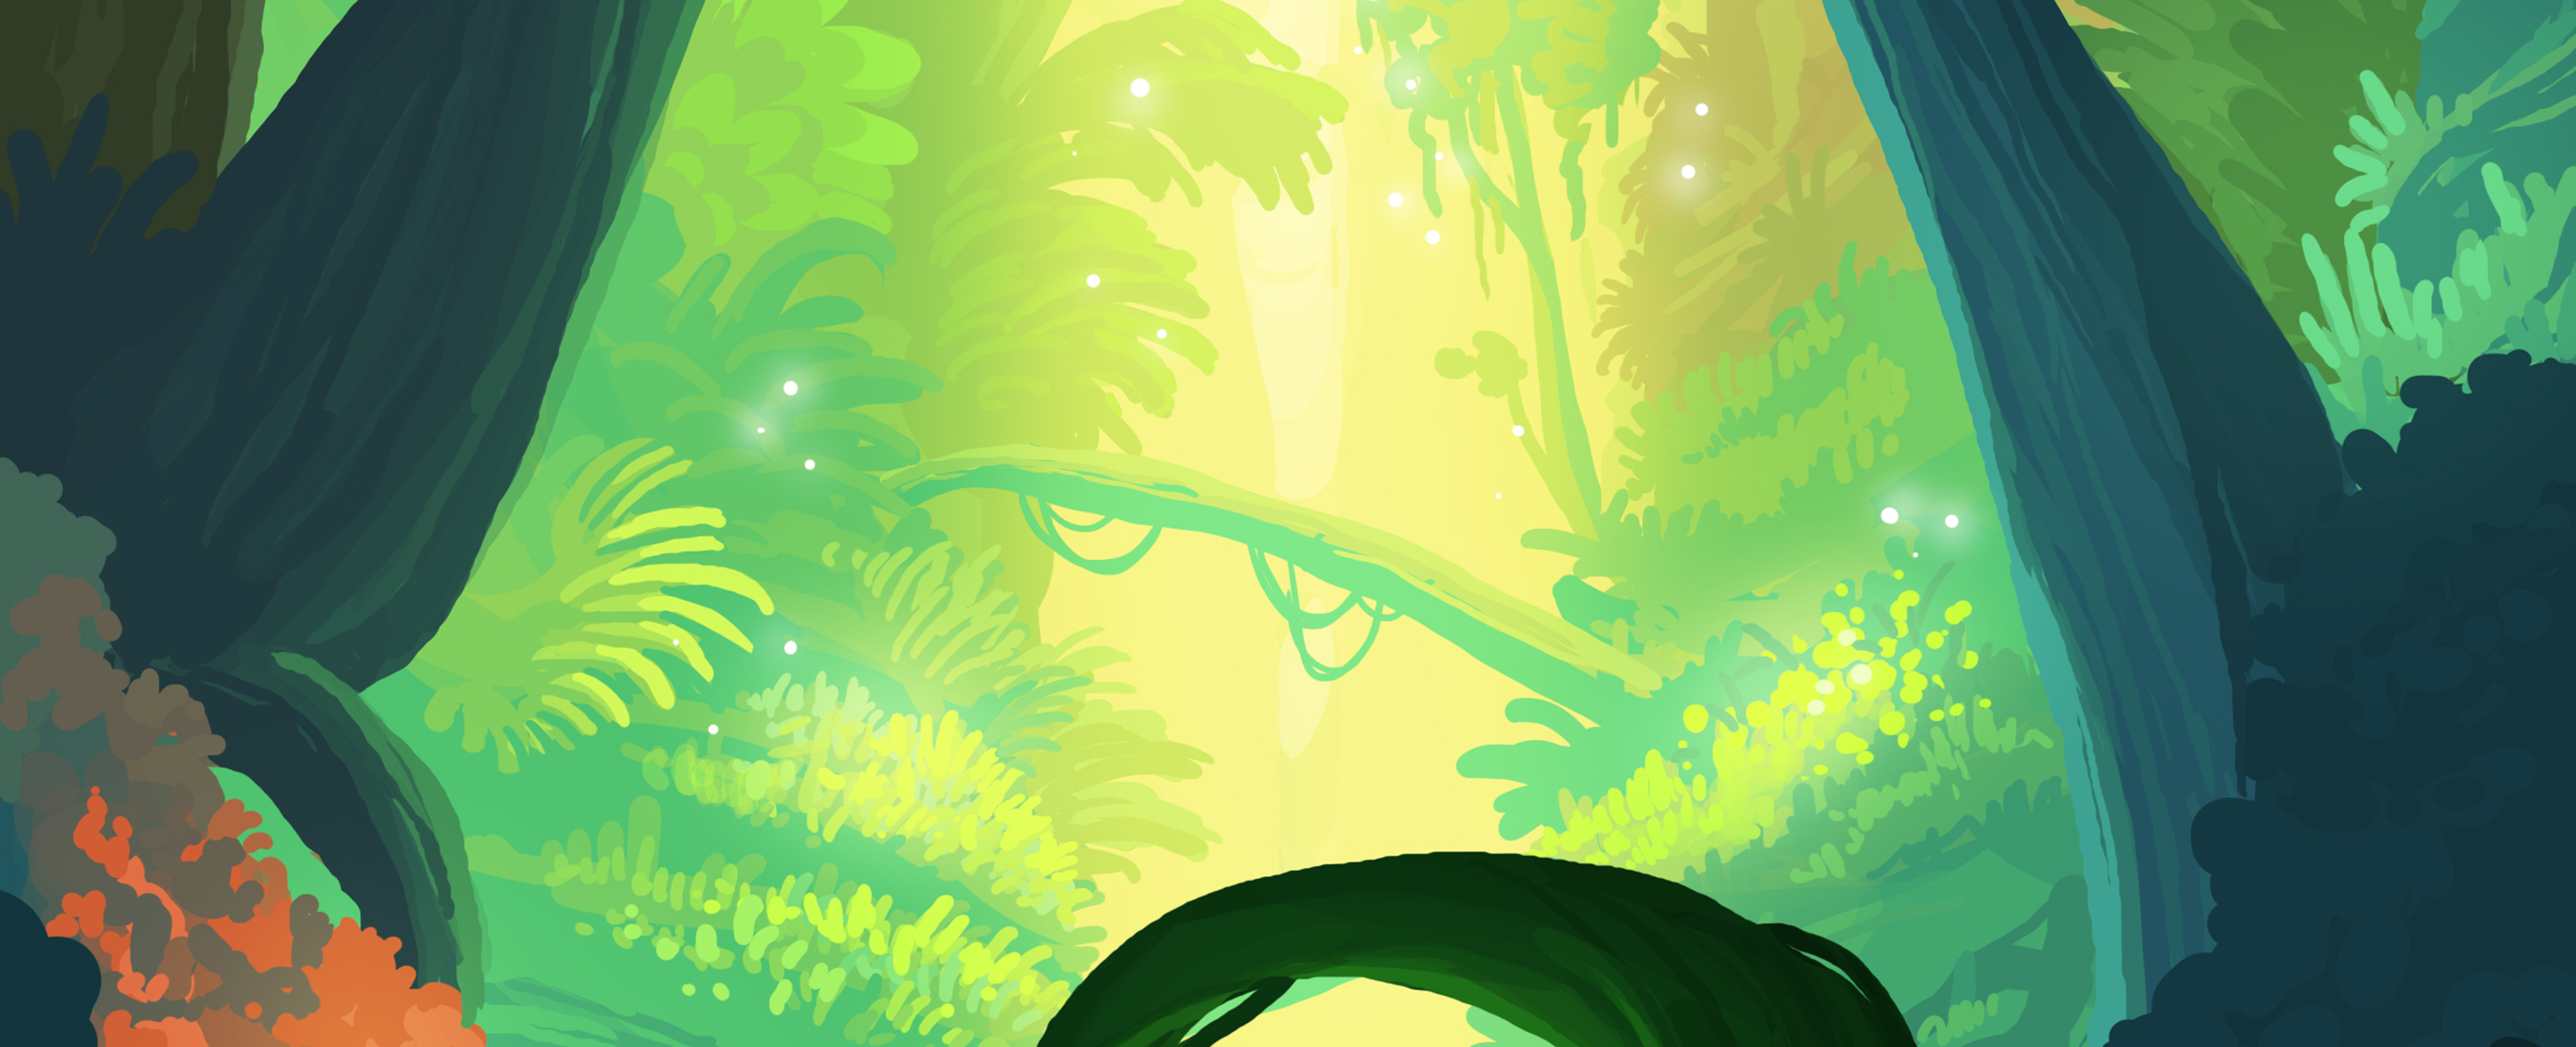 banner_forest